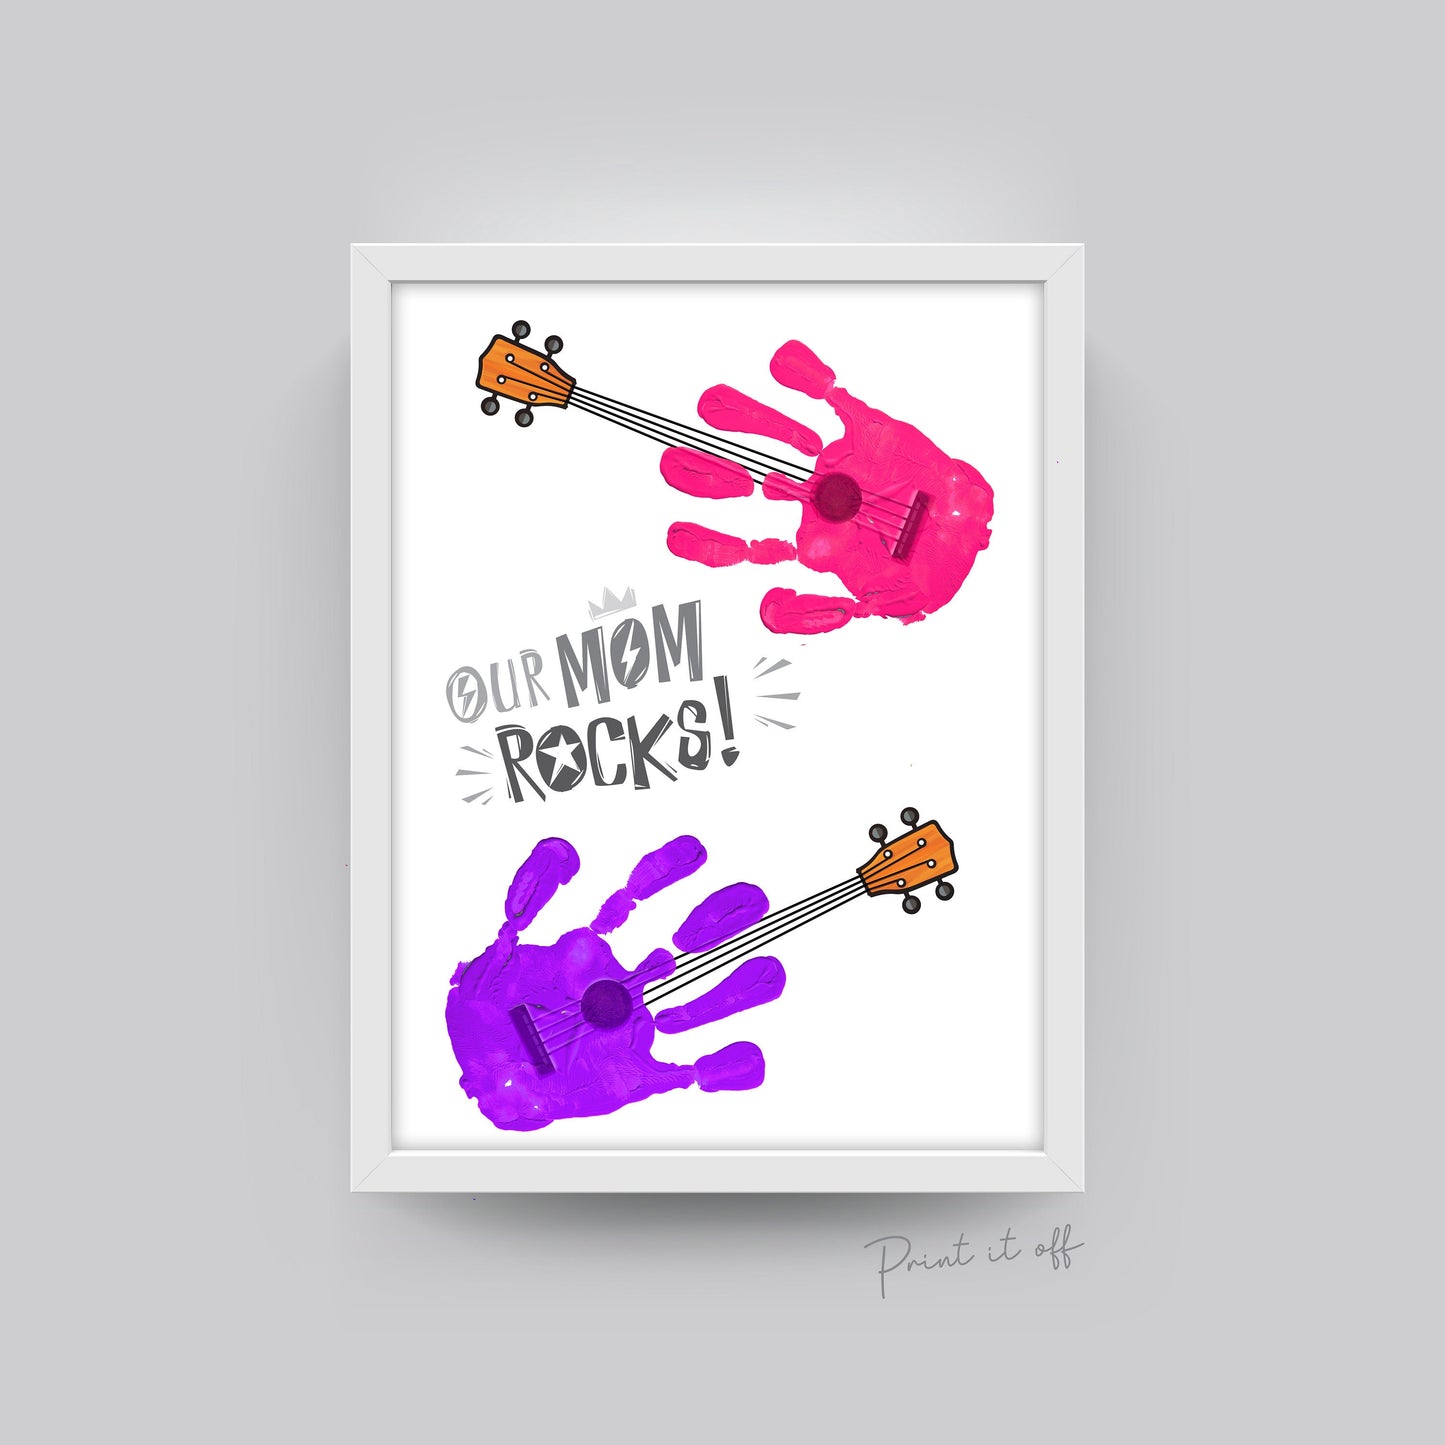 Handprint Art Craft / Our Mom Rocks Guitar / Mother's Day Birthday / Kids Baby Toddler / Keepsake Memory DIY Card Gift / Print it Off 0485